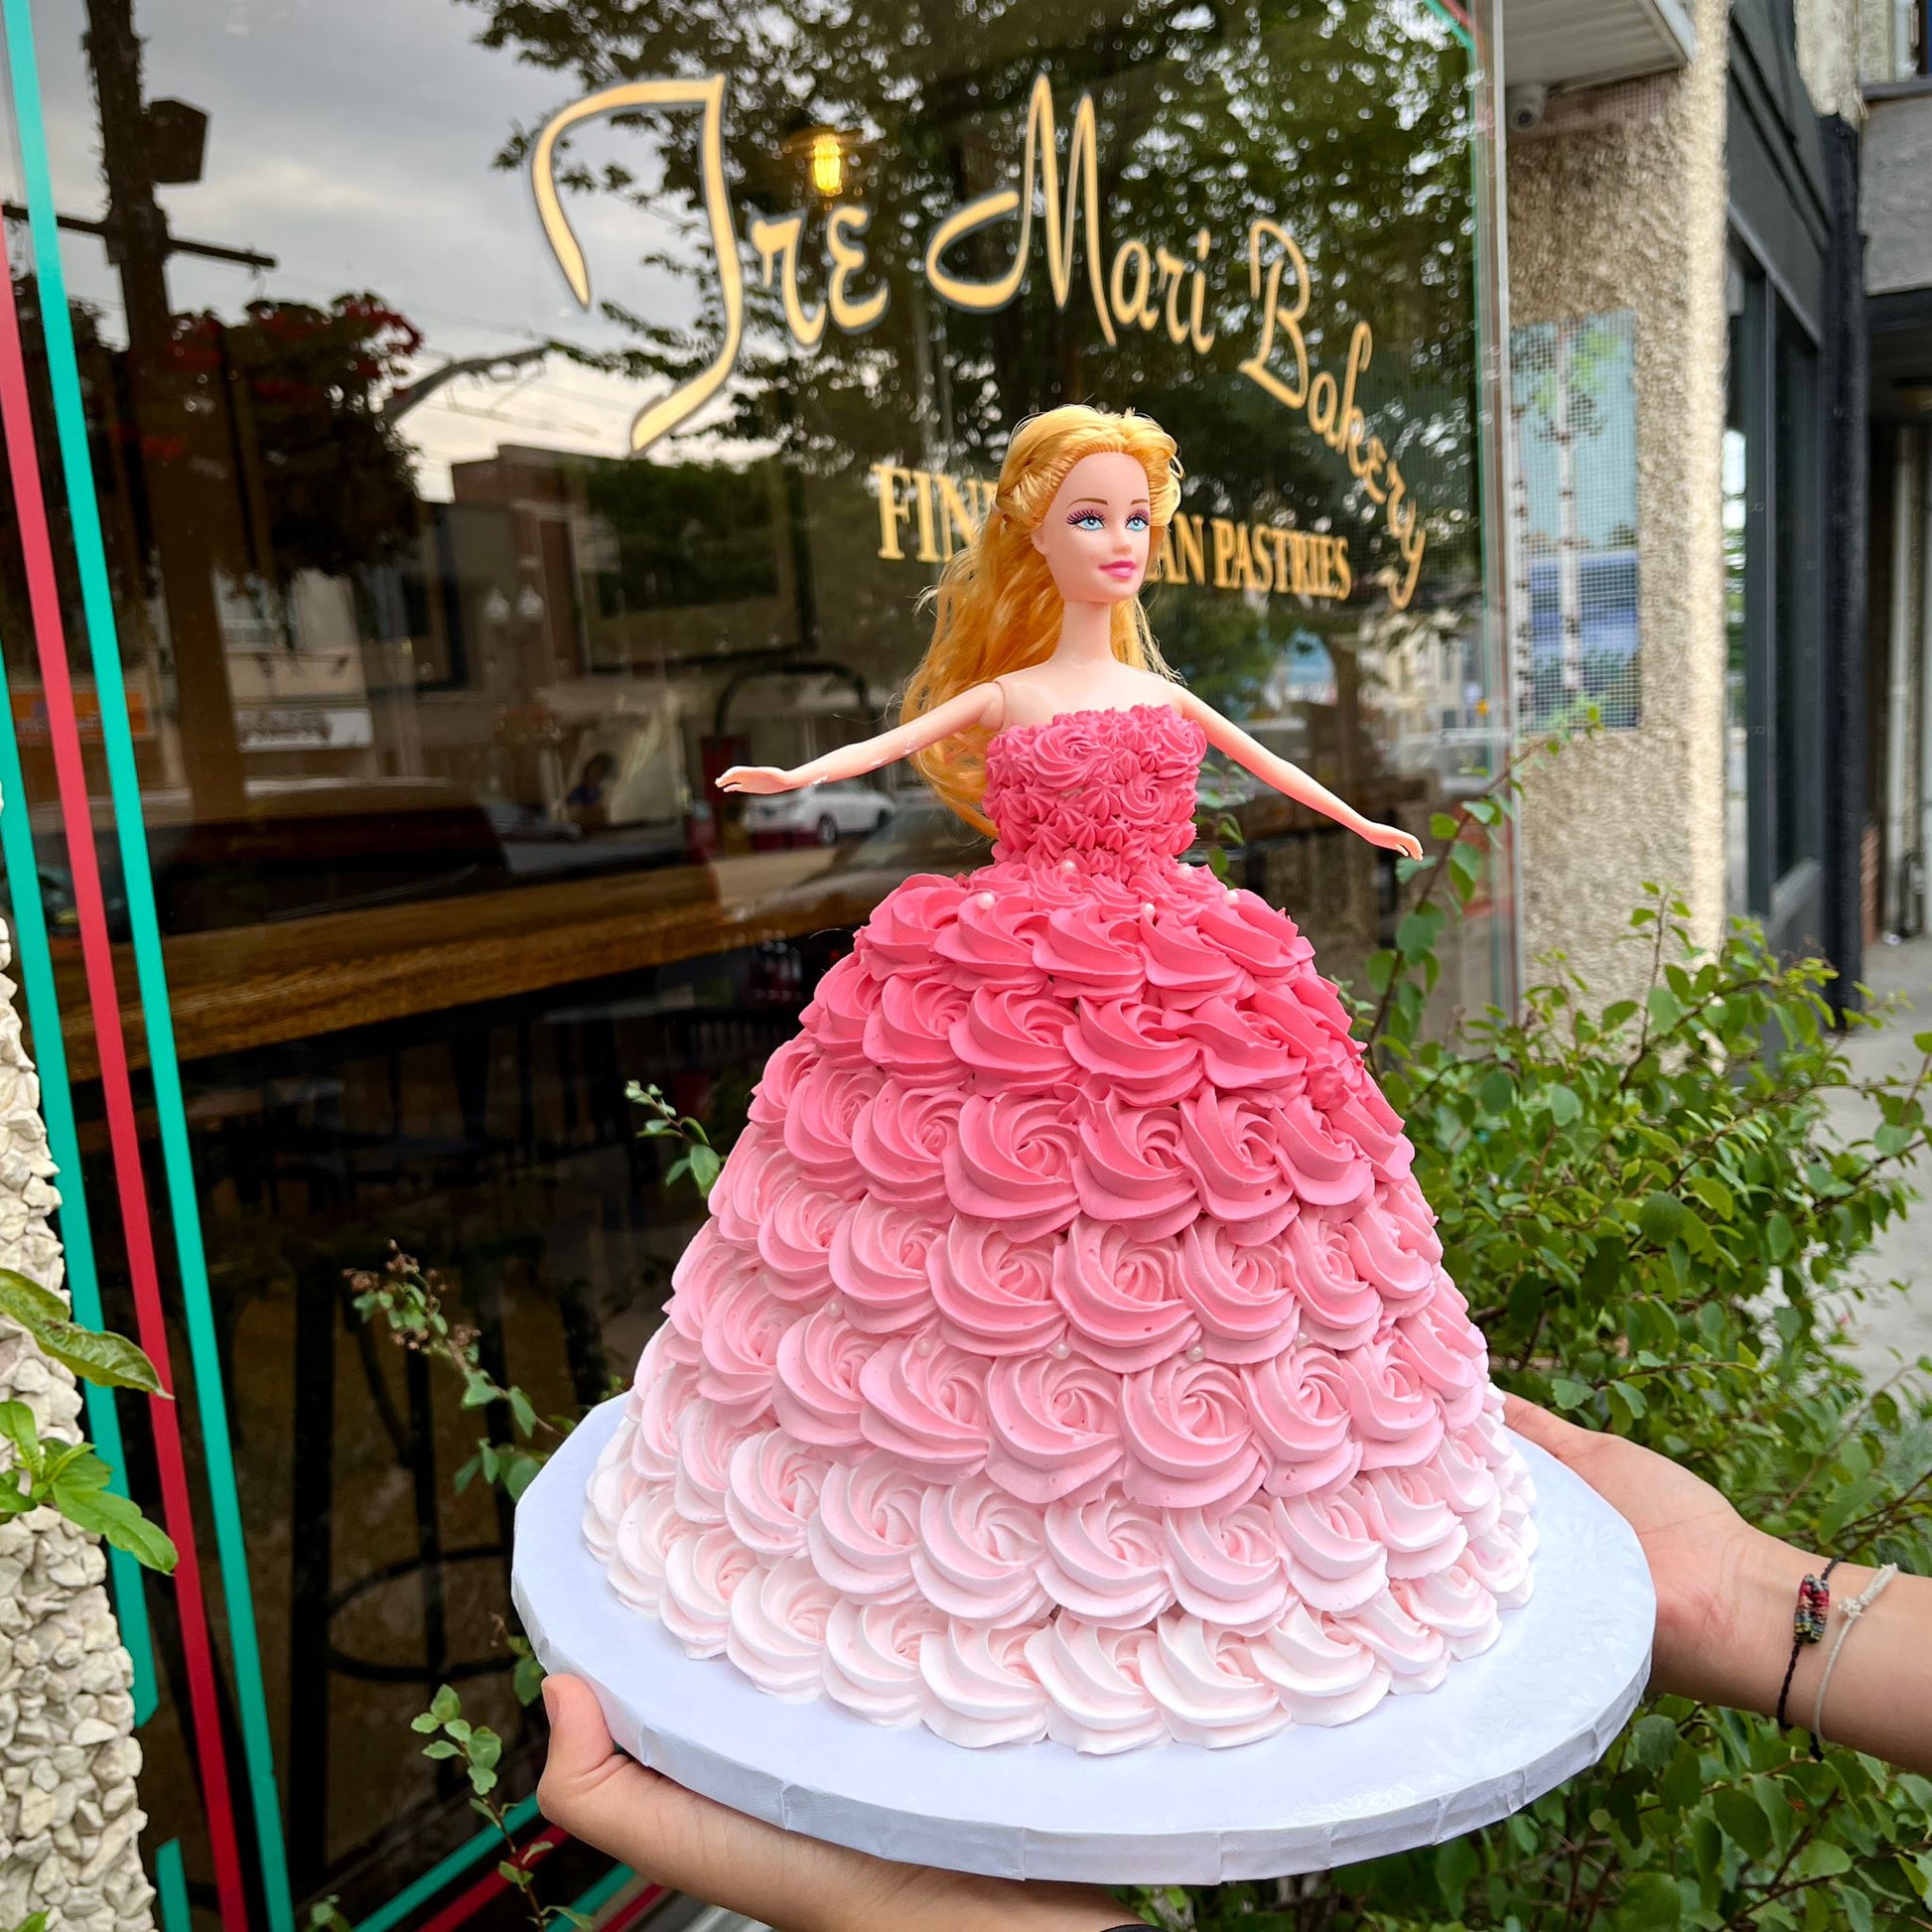 Barbie in a pink dress birthday cake